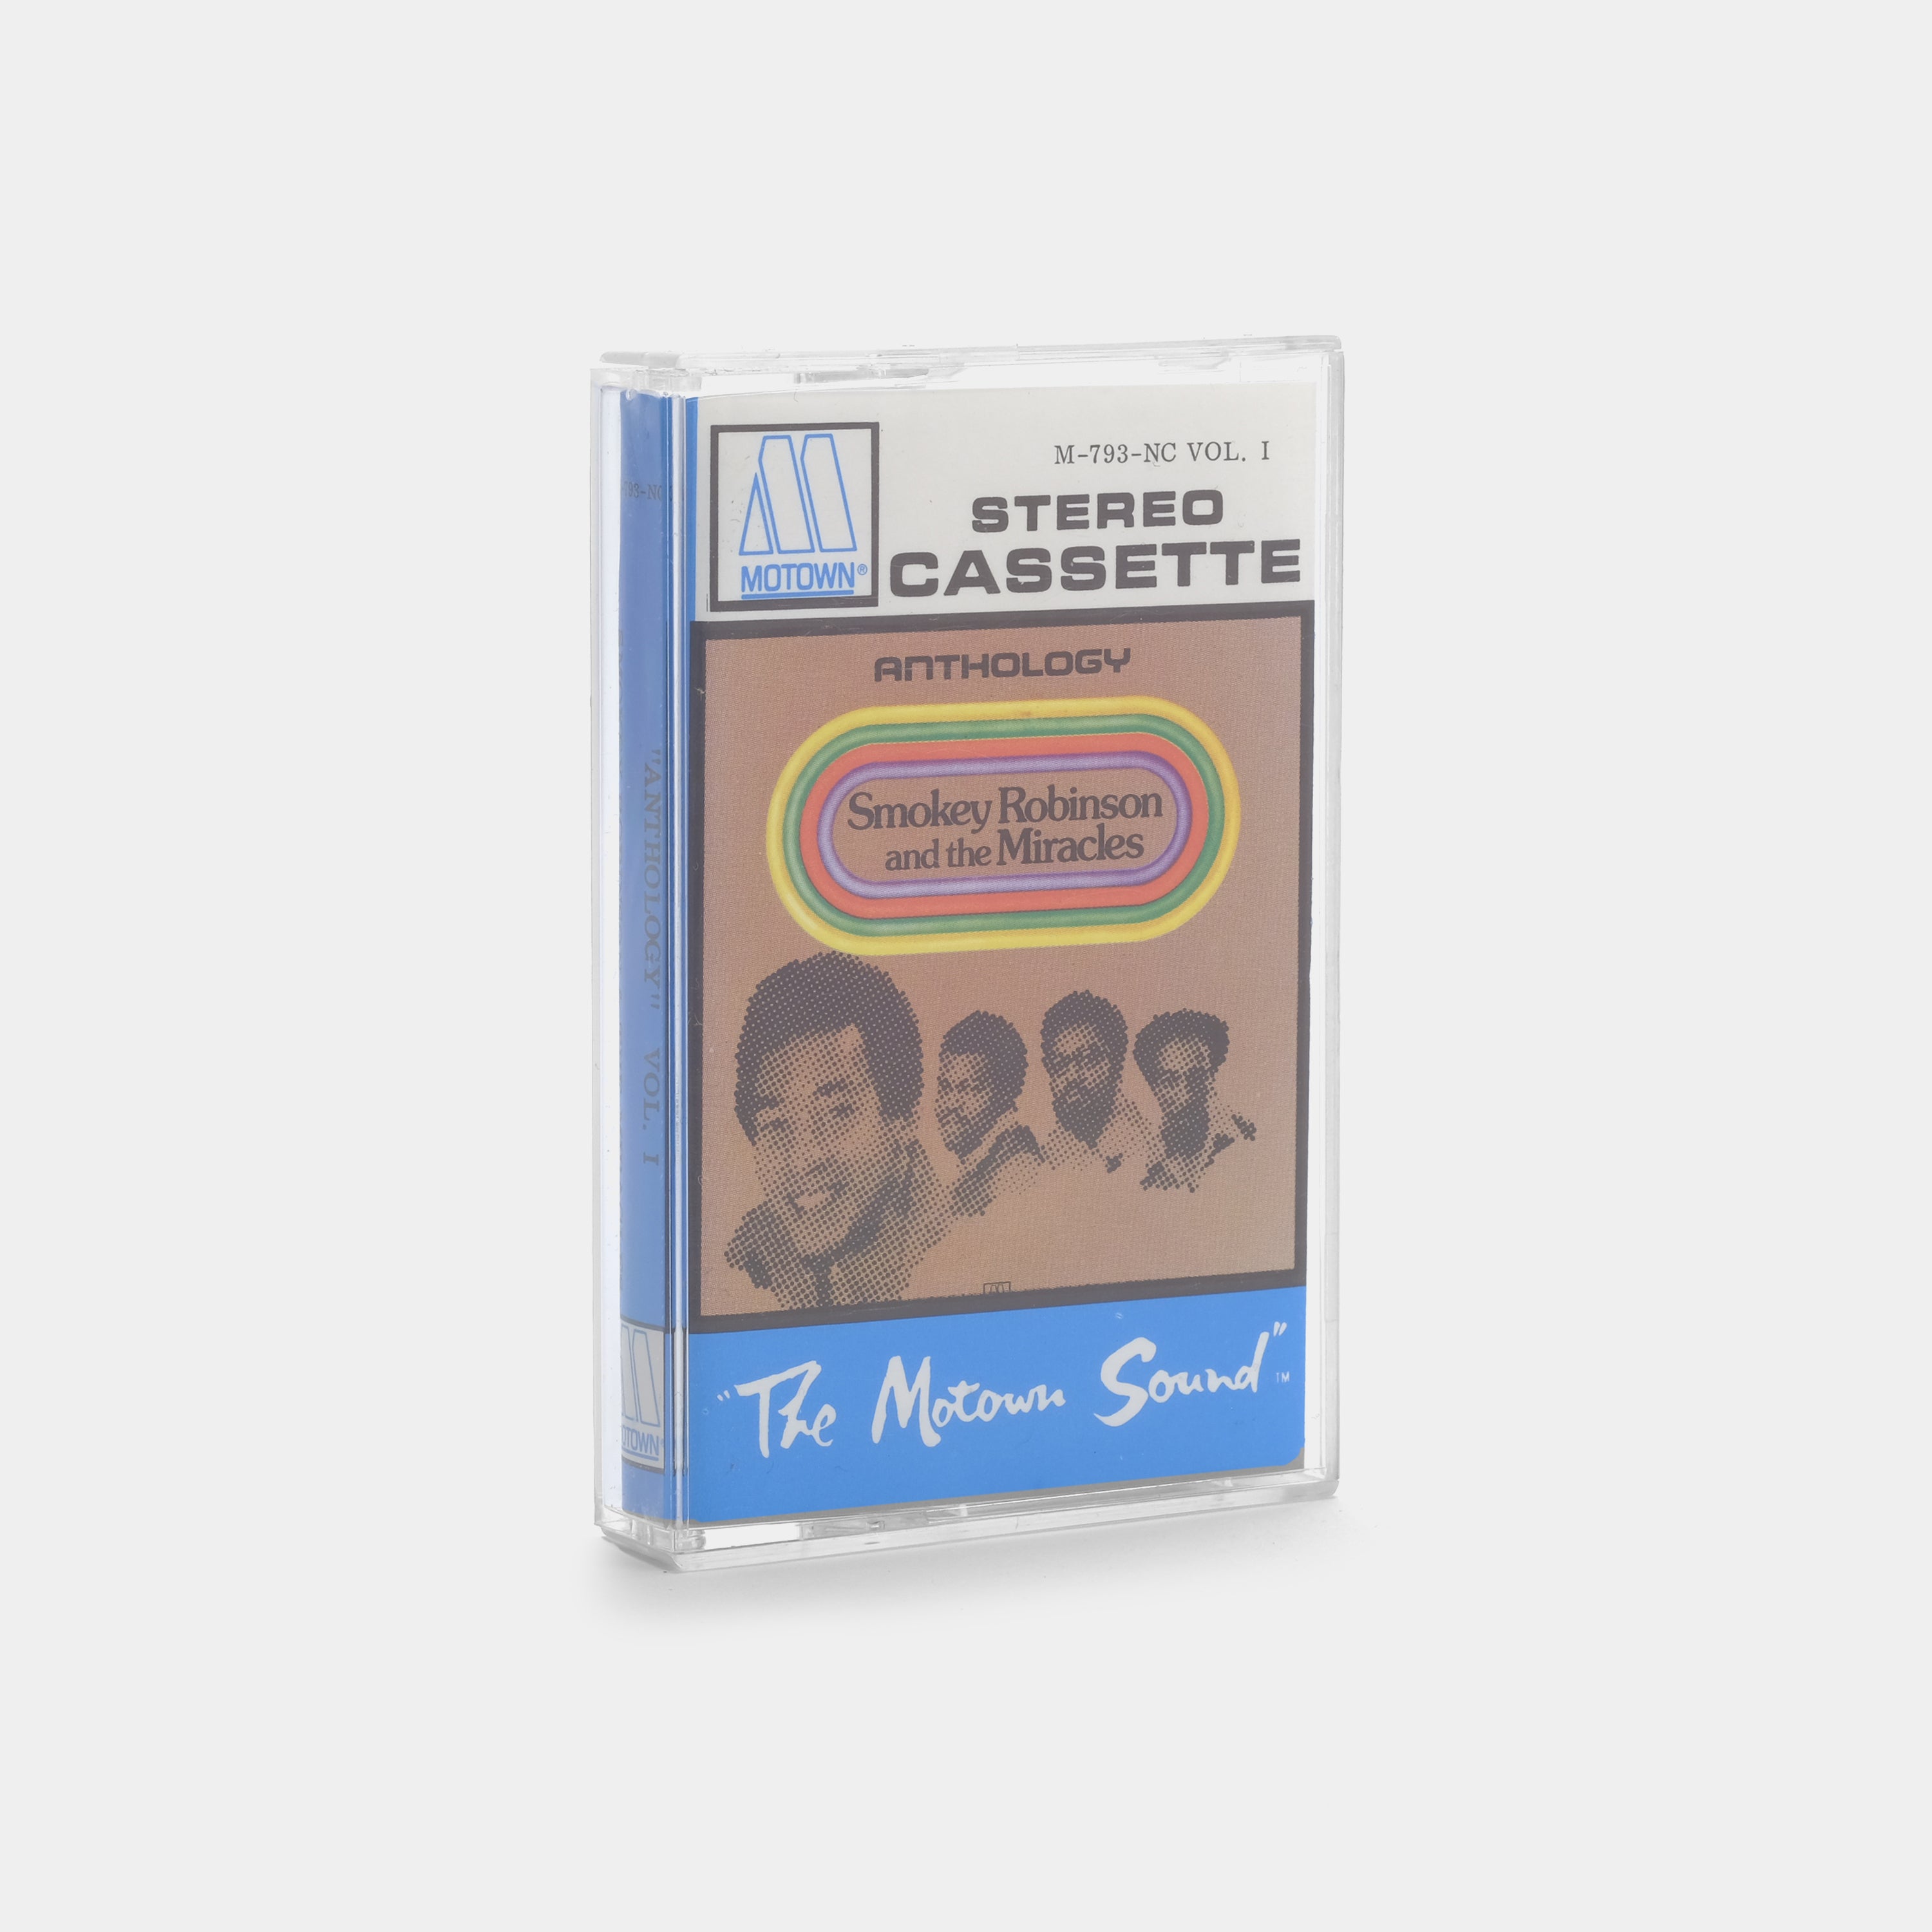 Smokey Robinson And The Miracles - Smokey Robinson And The Miracles (Vol. 1) Cassette Tape